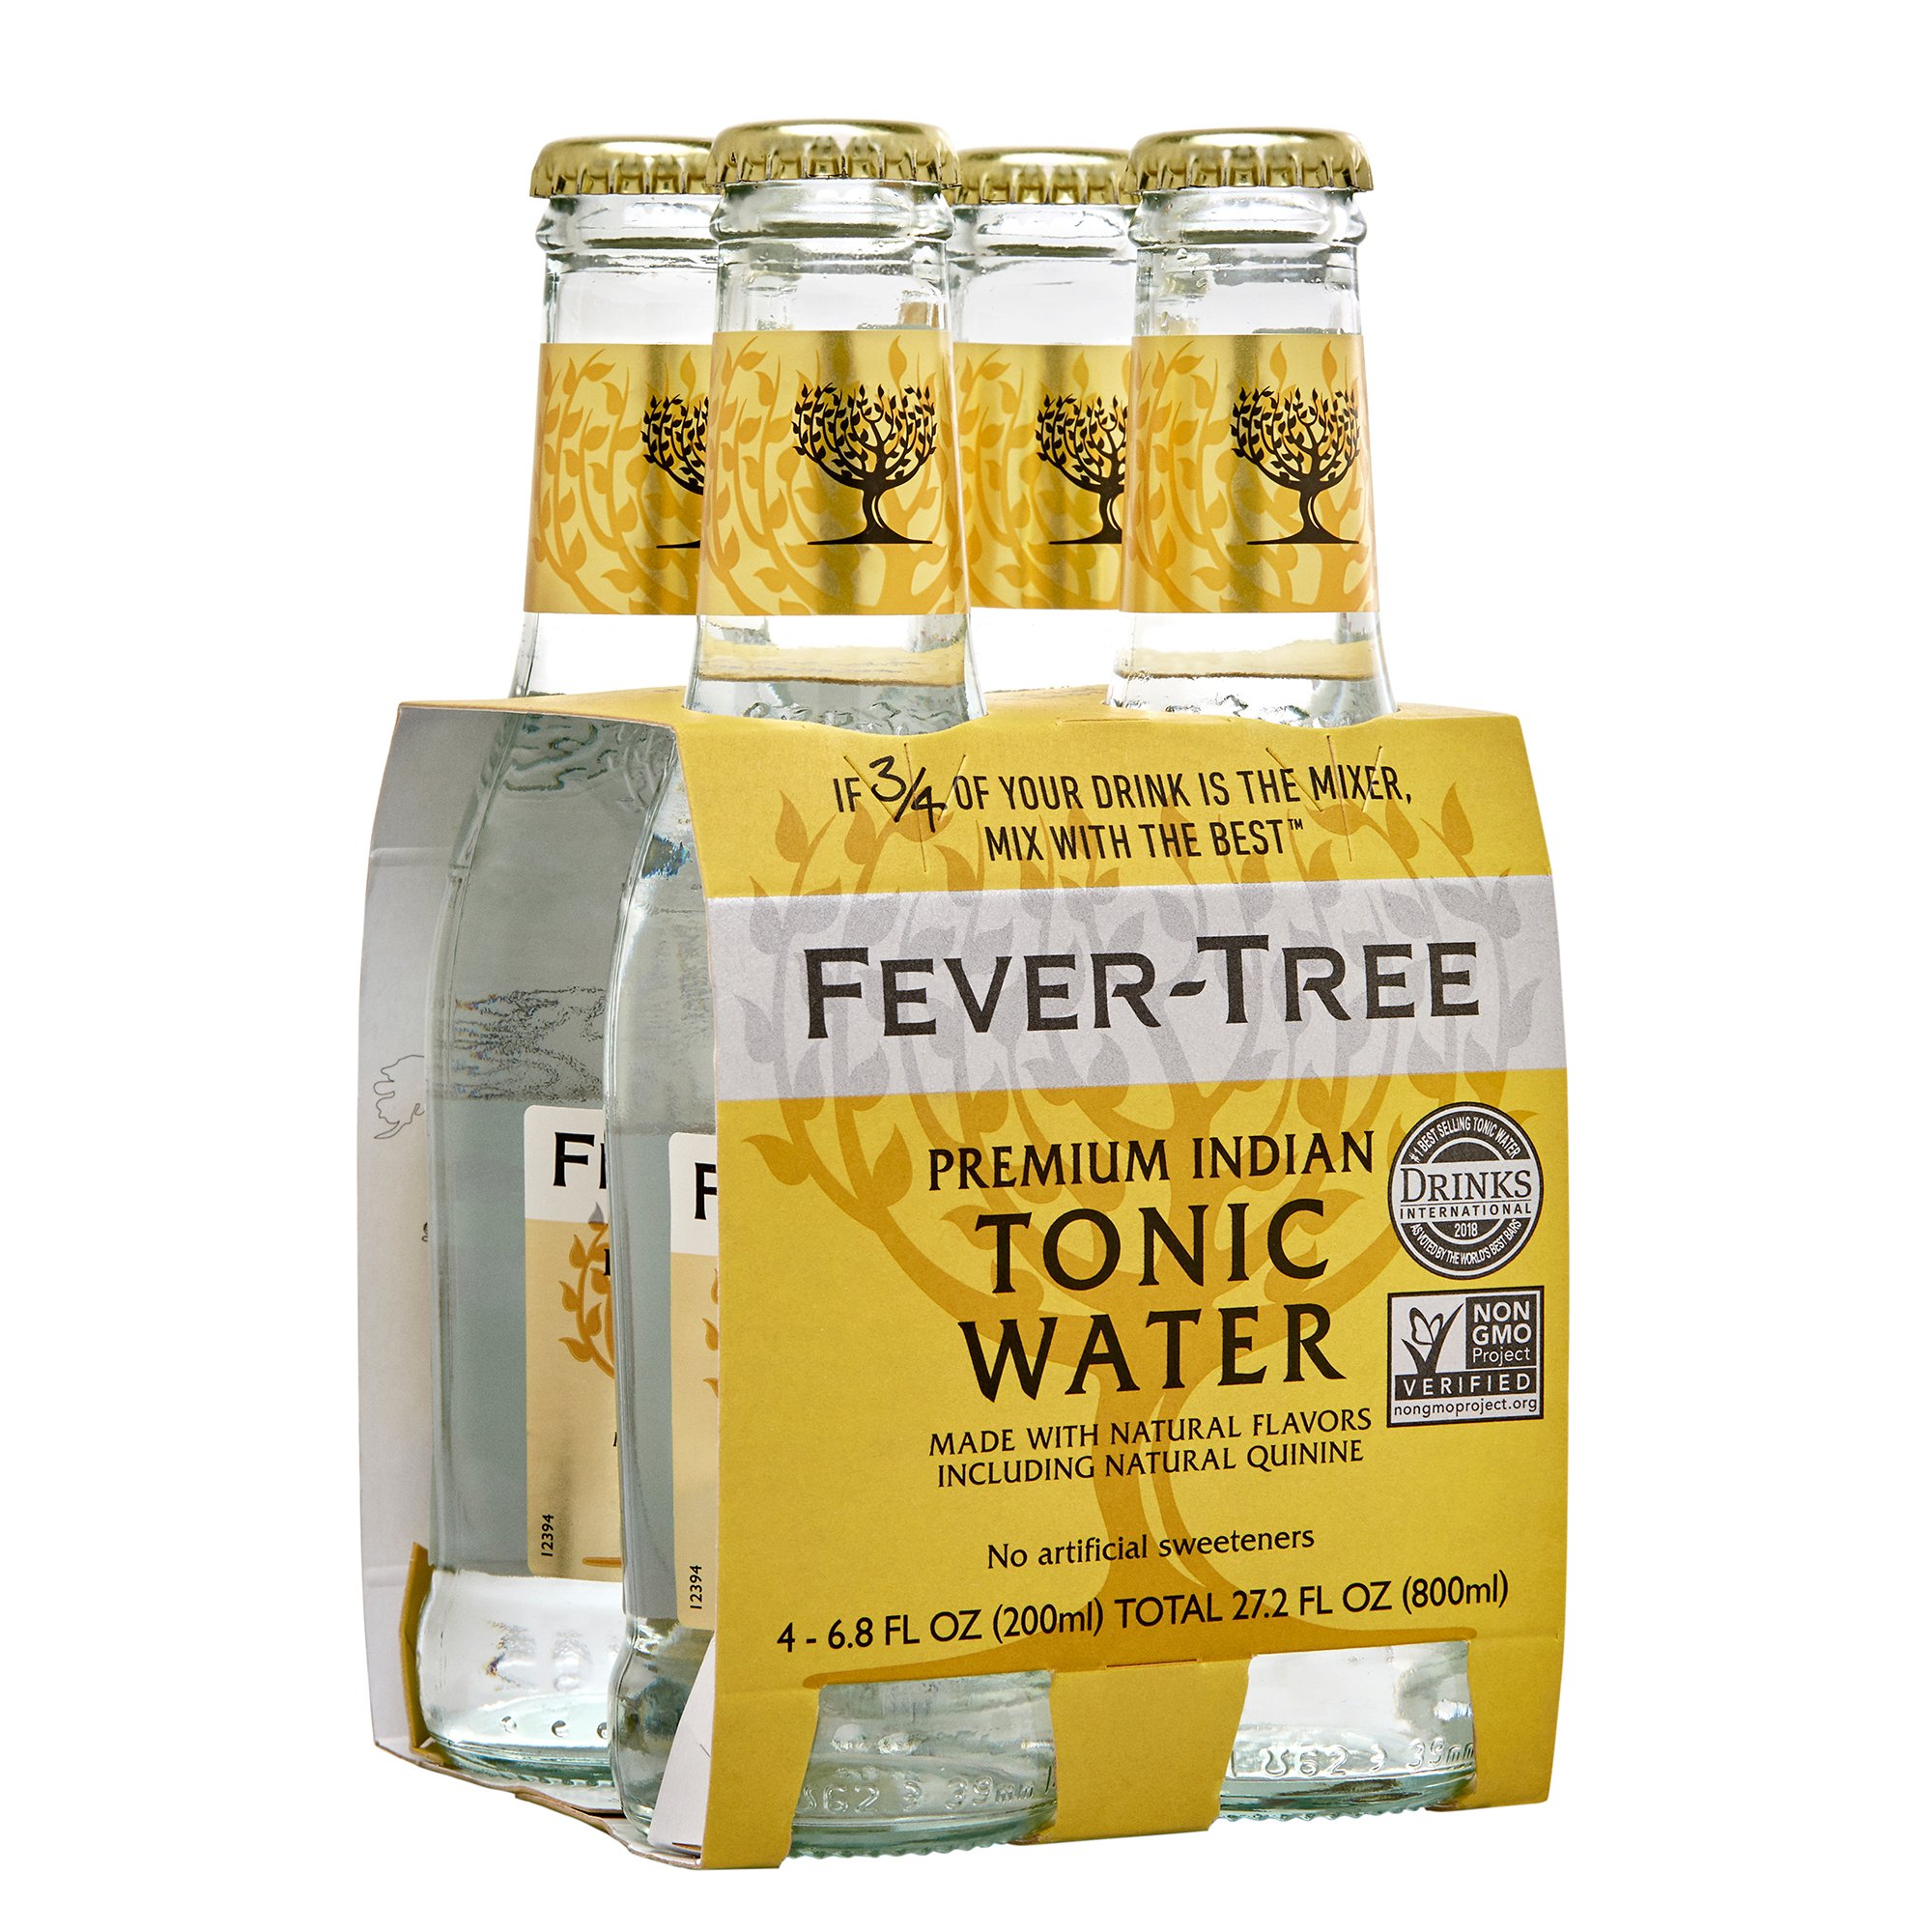 Fever-Tree Premium Indian Tonic Water 4 pk Bottles - Shop Water at H-E-B